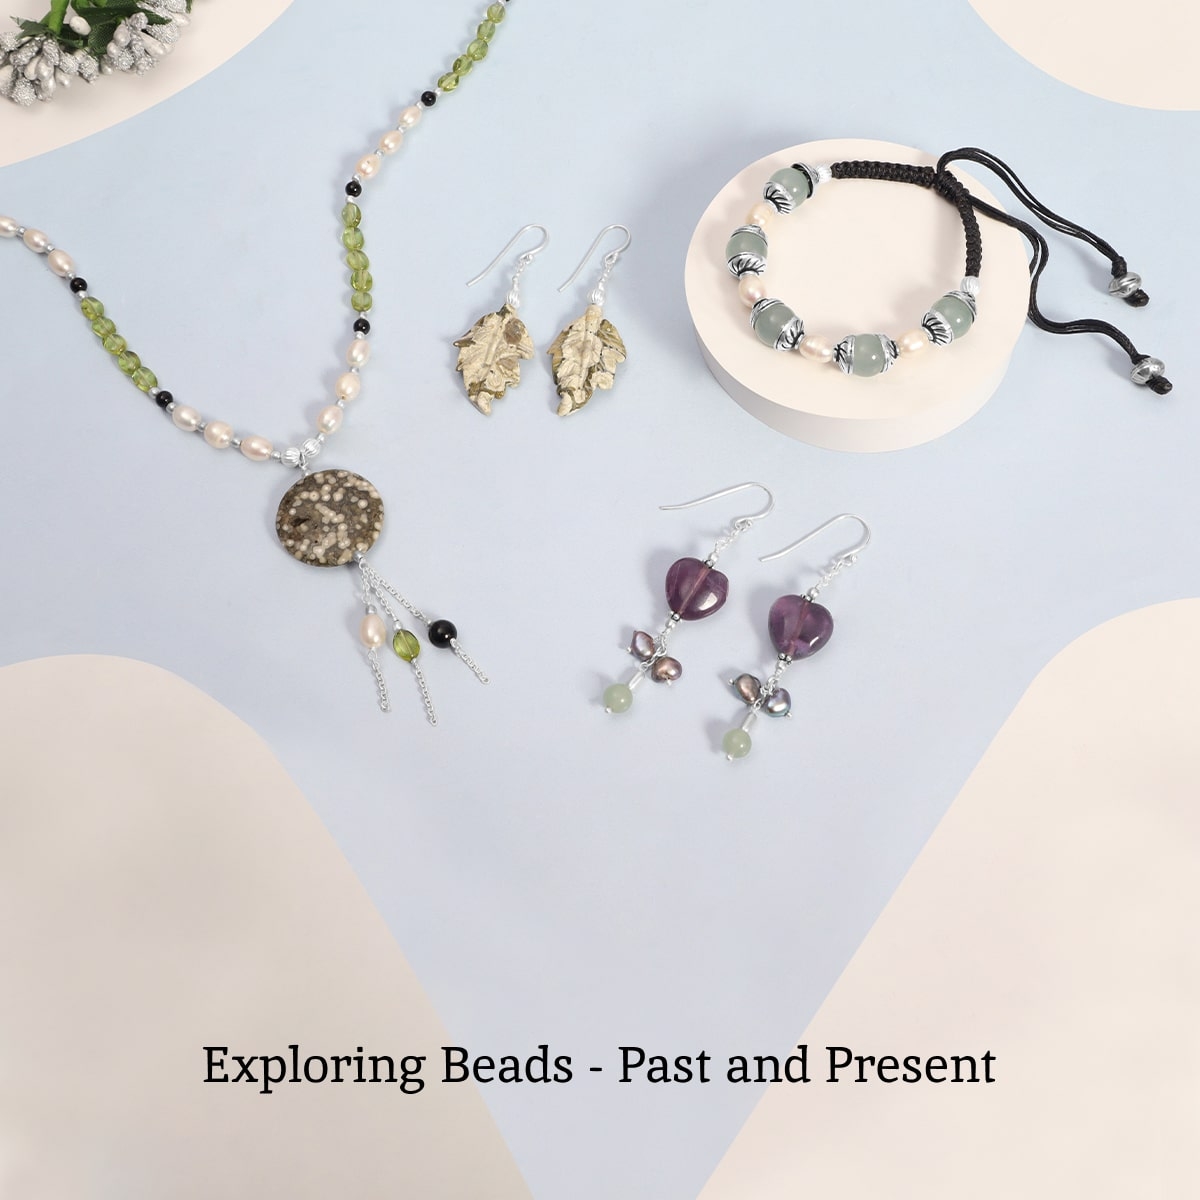 History of Beads Jewelry